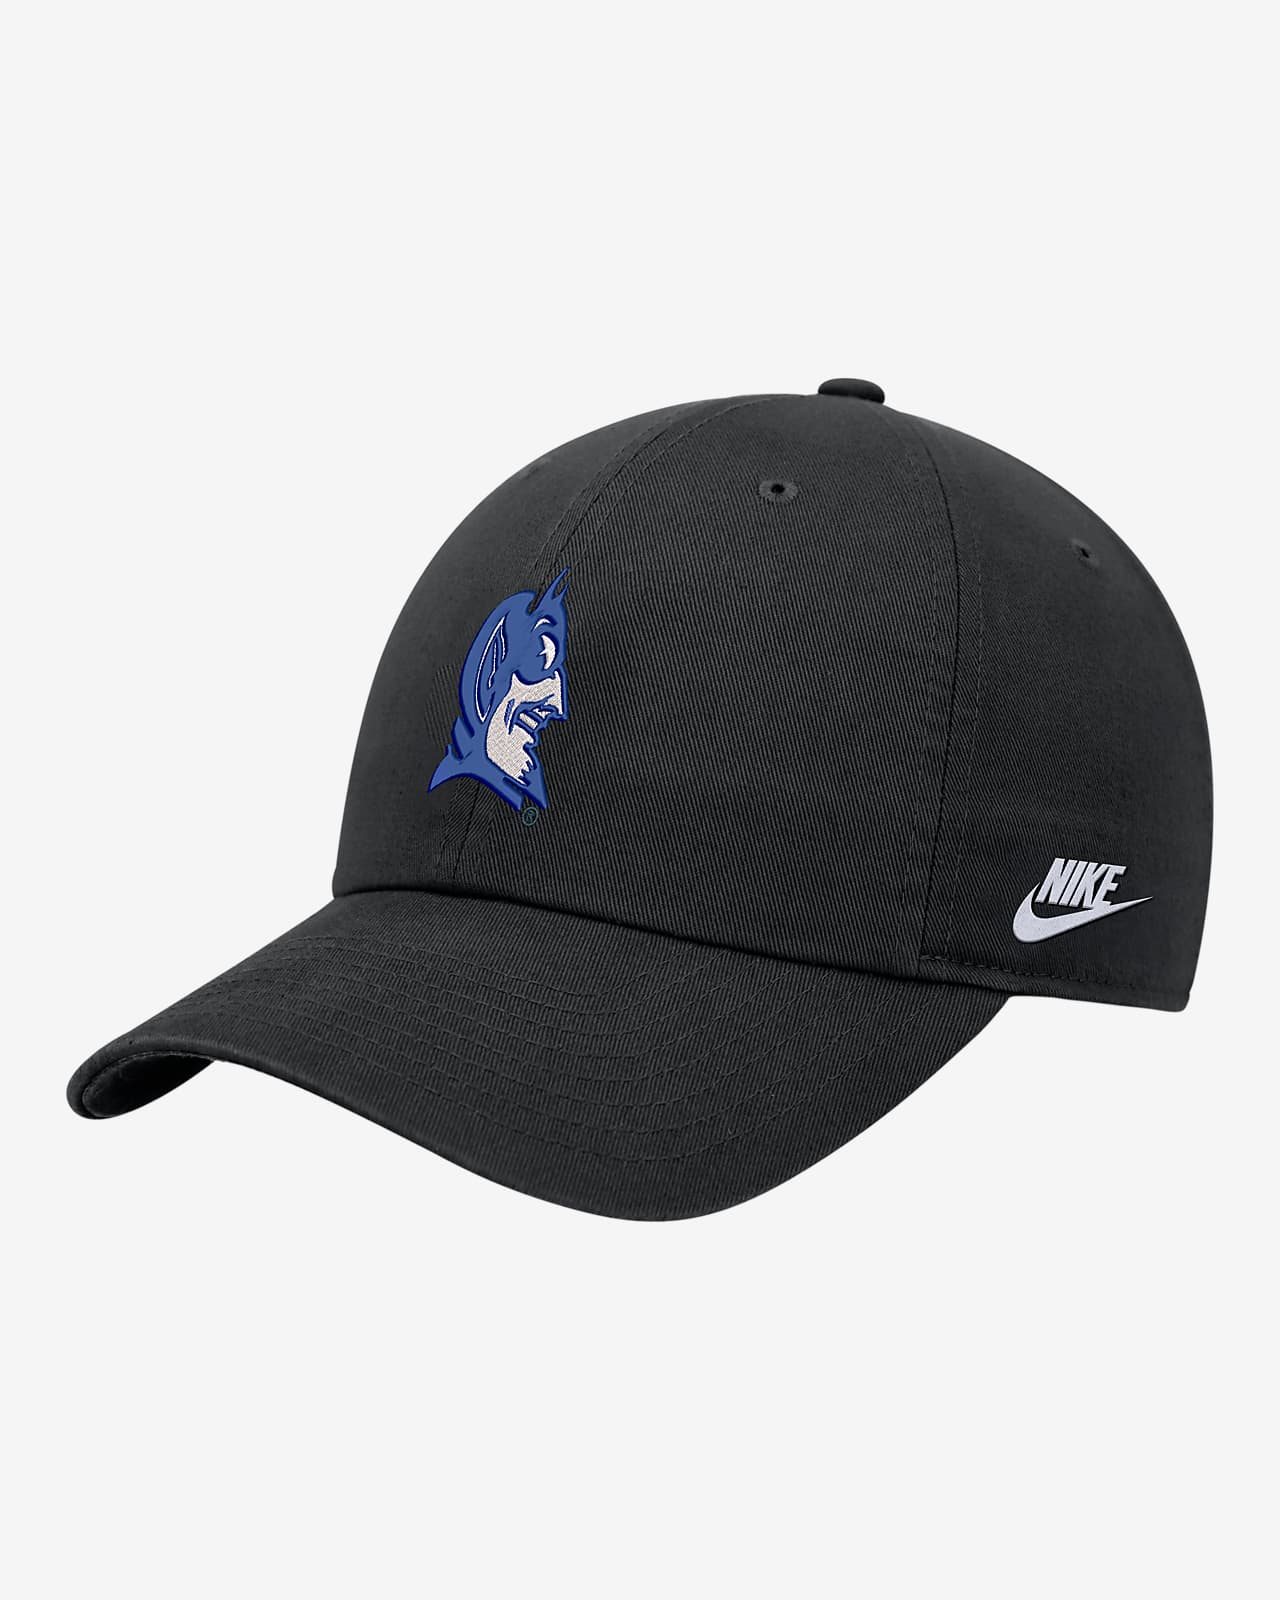 Duke Nike College Cap